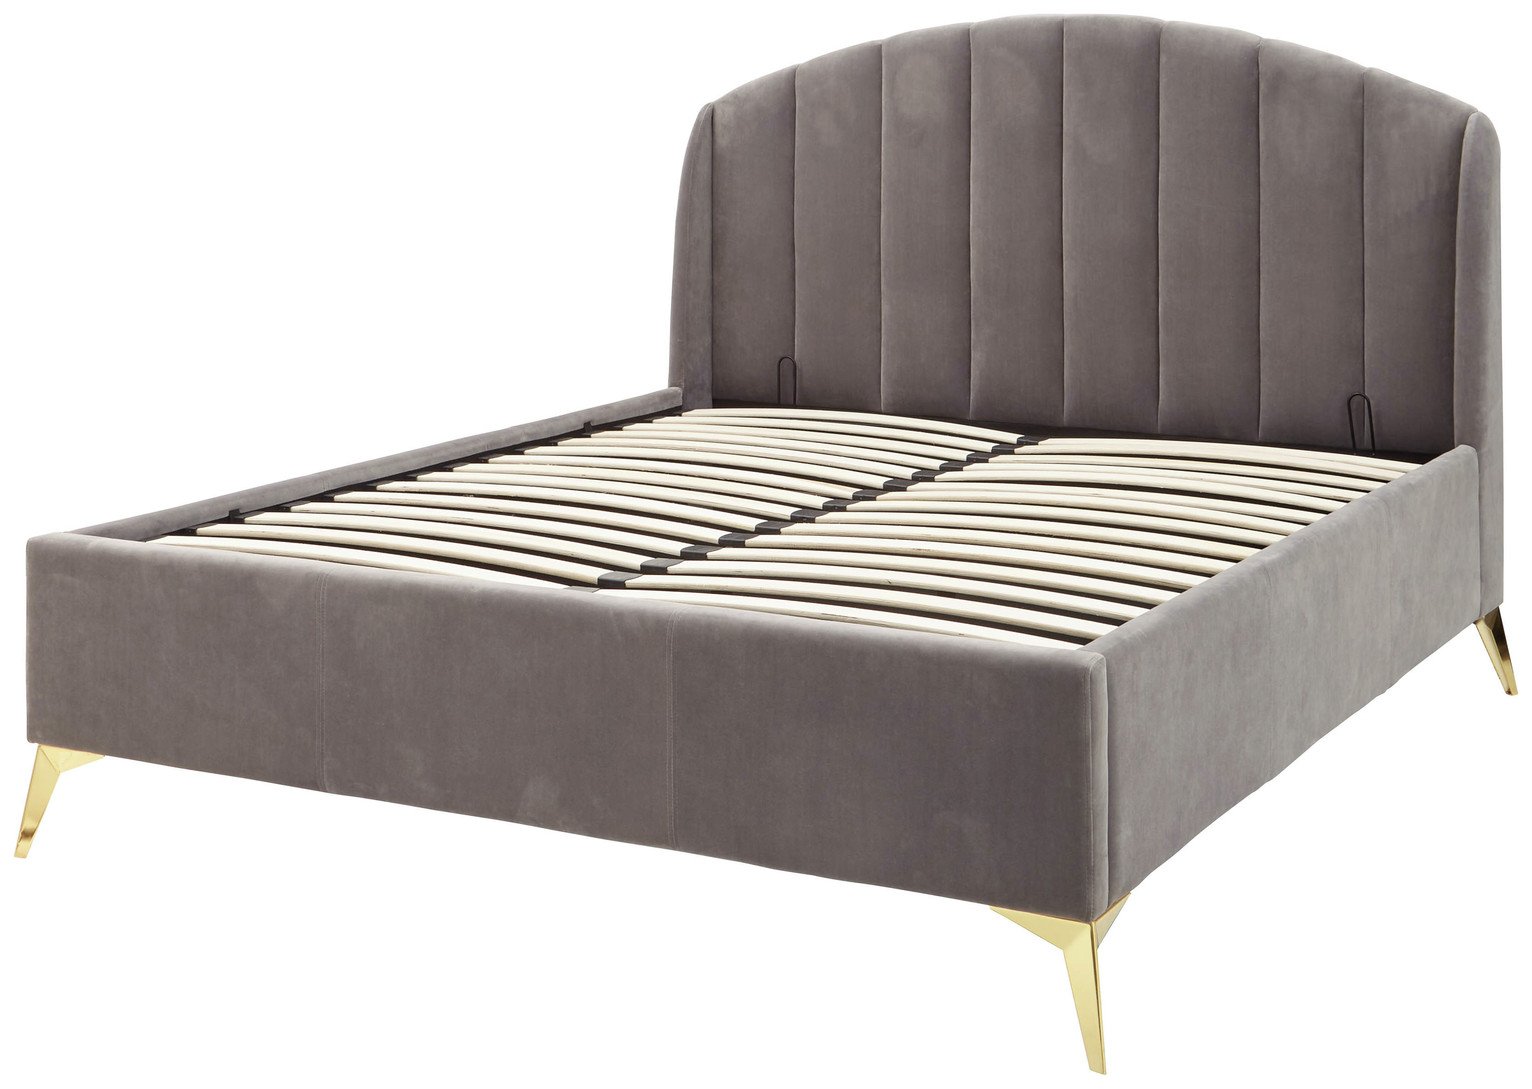 GFW Pettine Double Fabric Ottoman Bed Frame - Grey